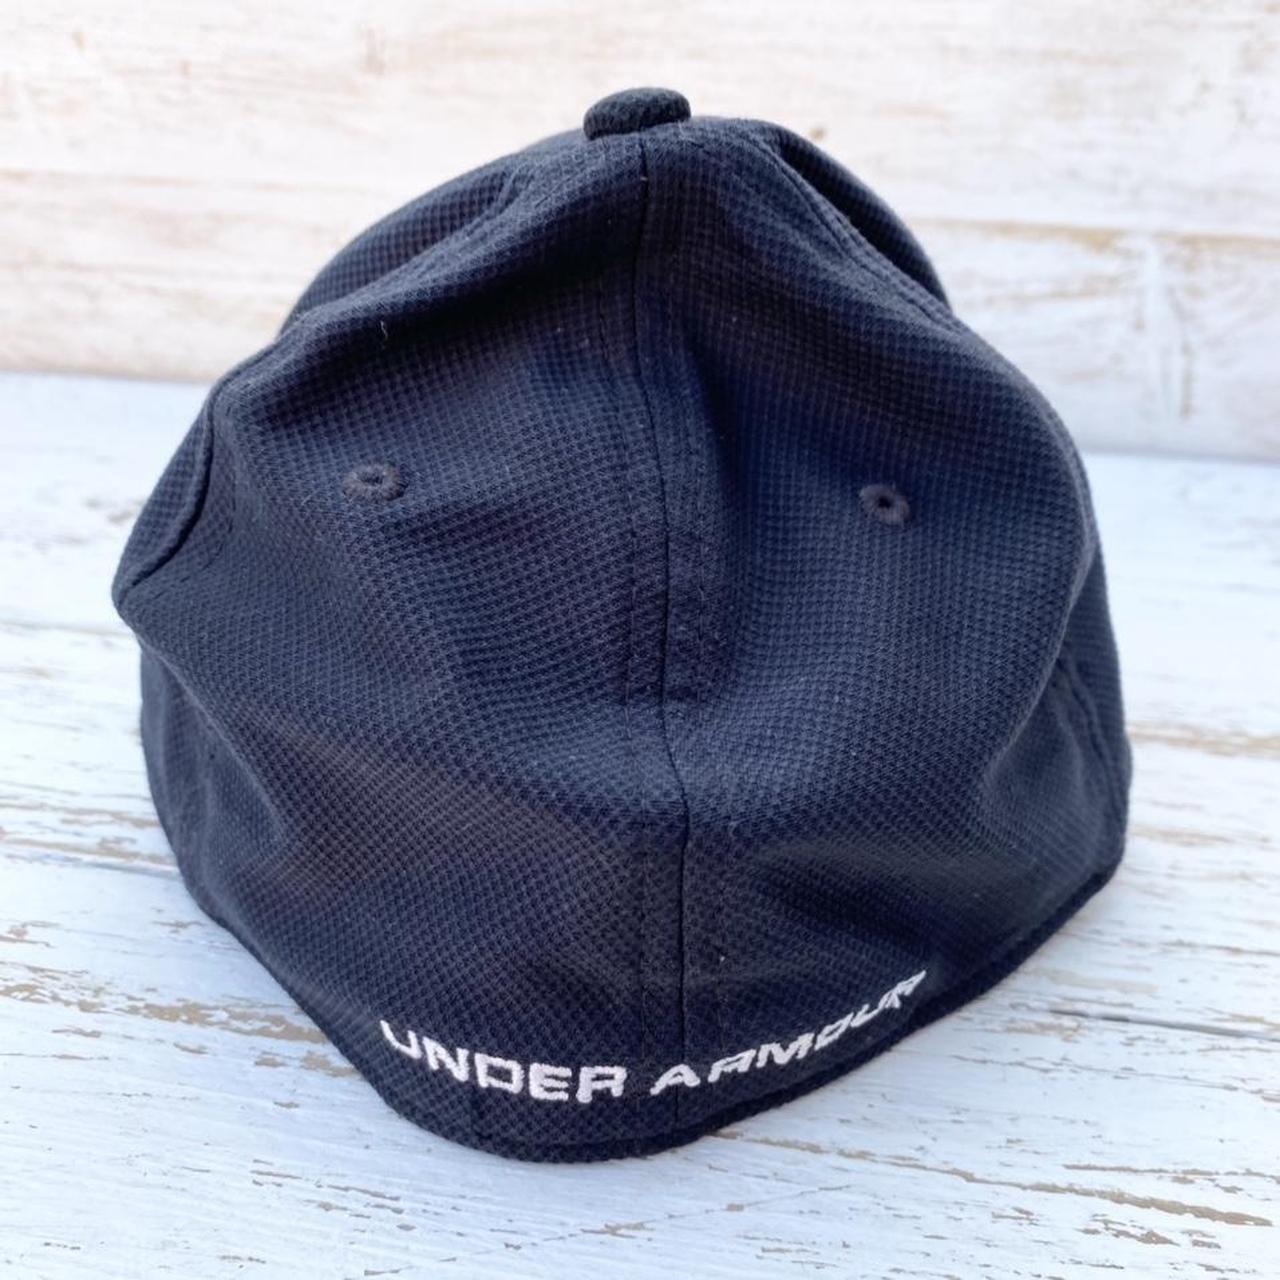 Black Under Armour baseball cap Men's / women's - Depop